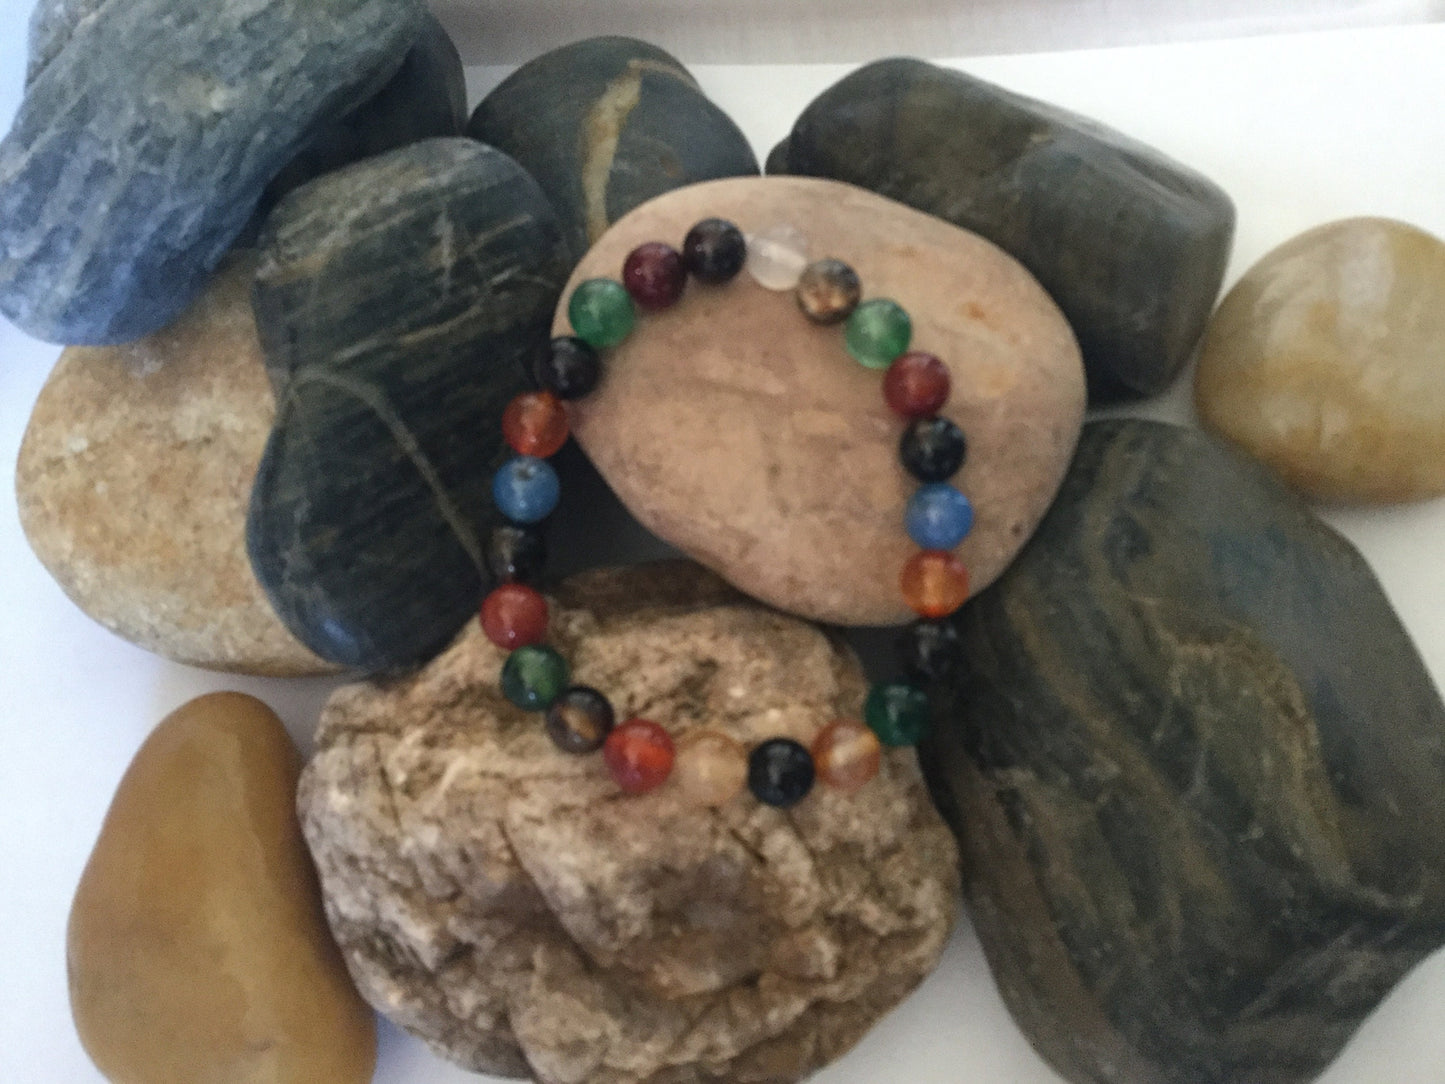 Agate Stone “Multi Color” , Healing Bracelet.